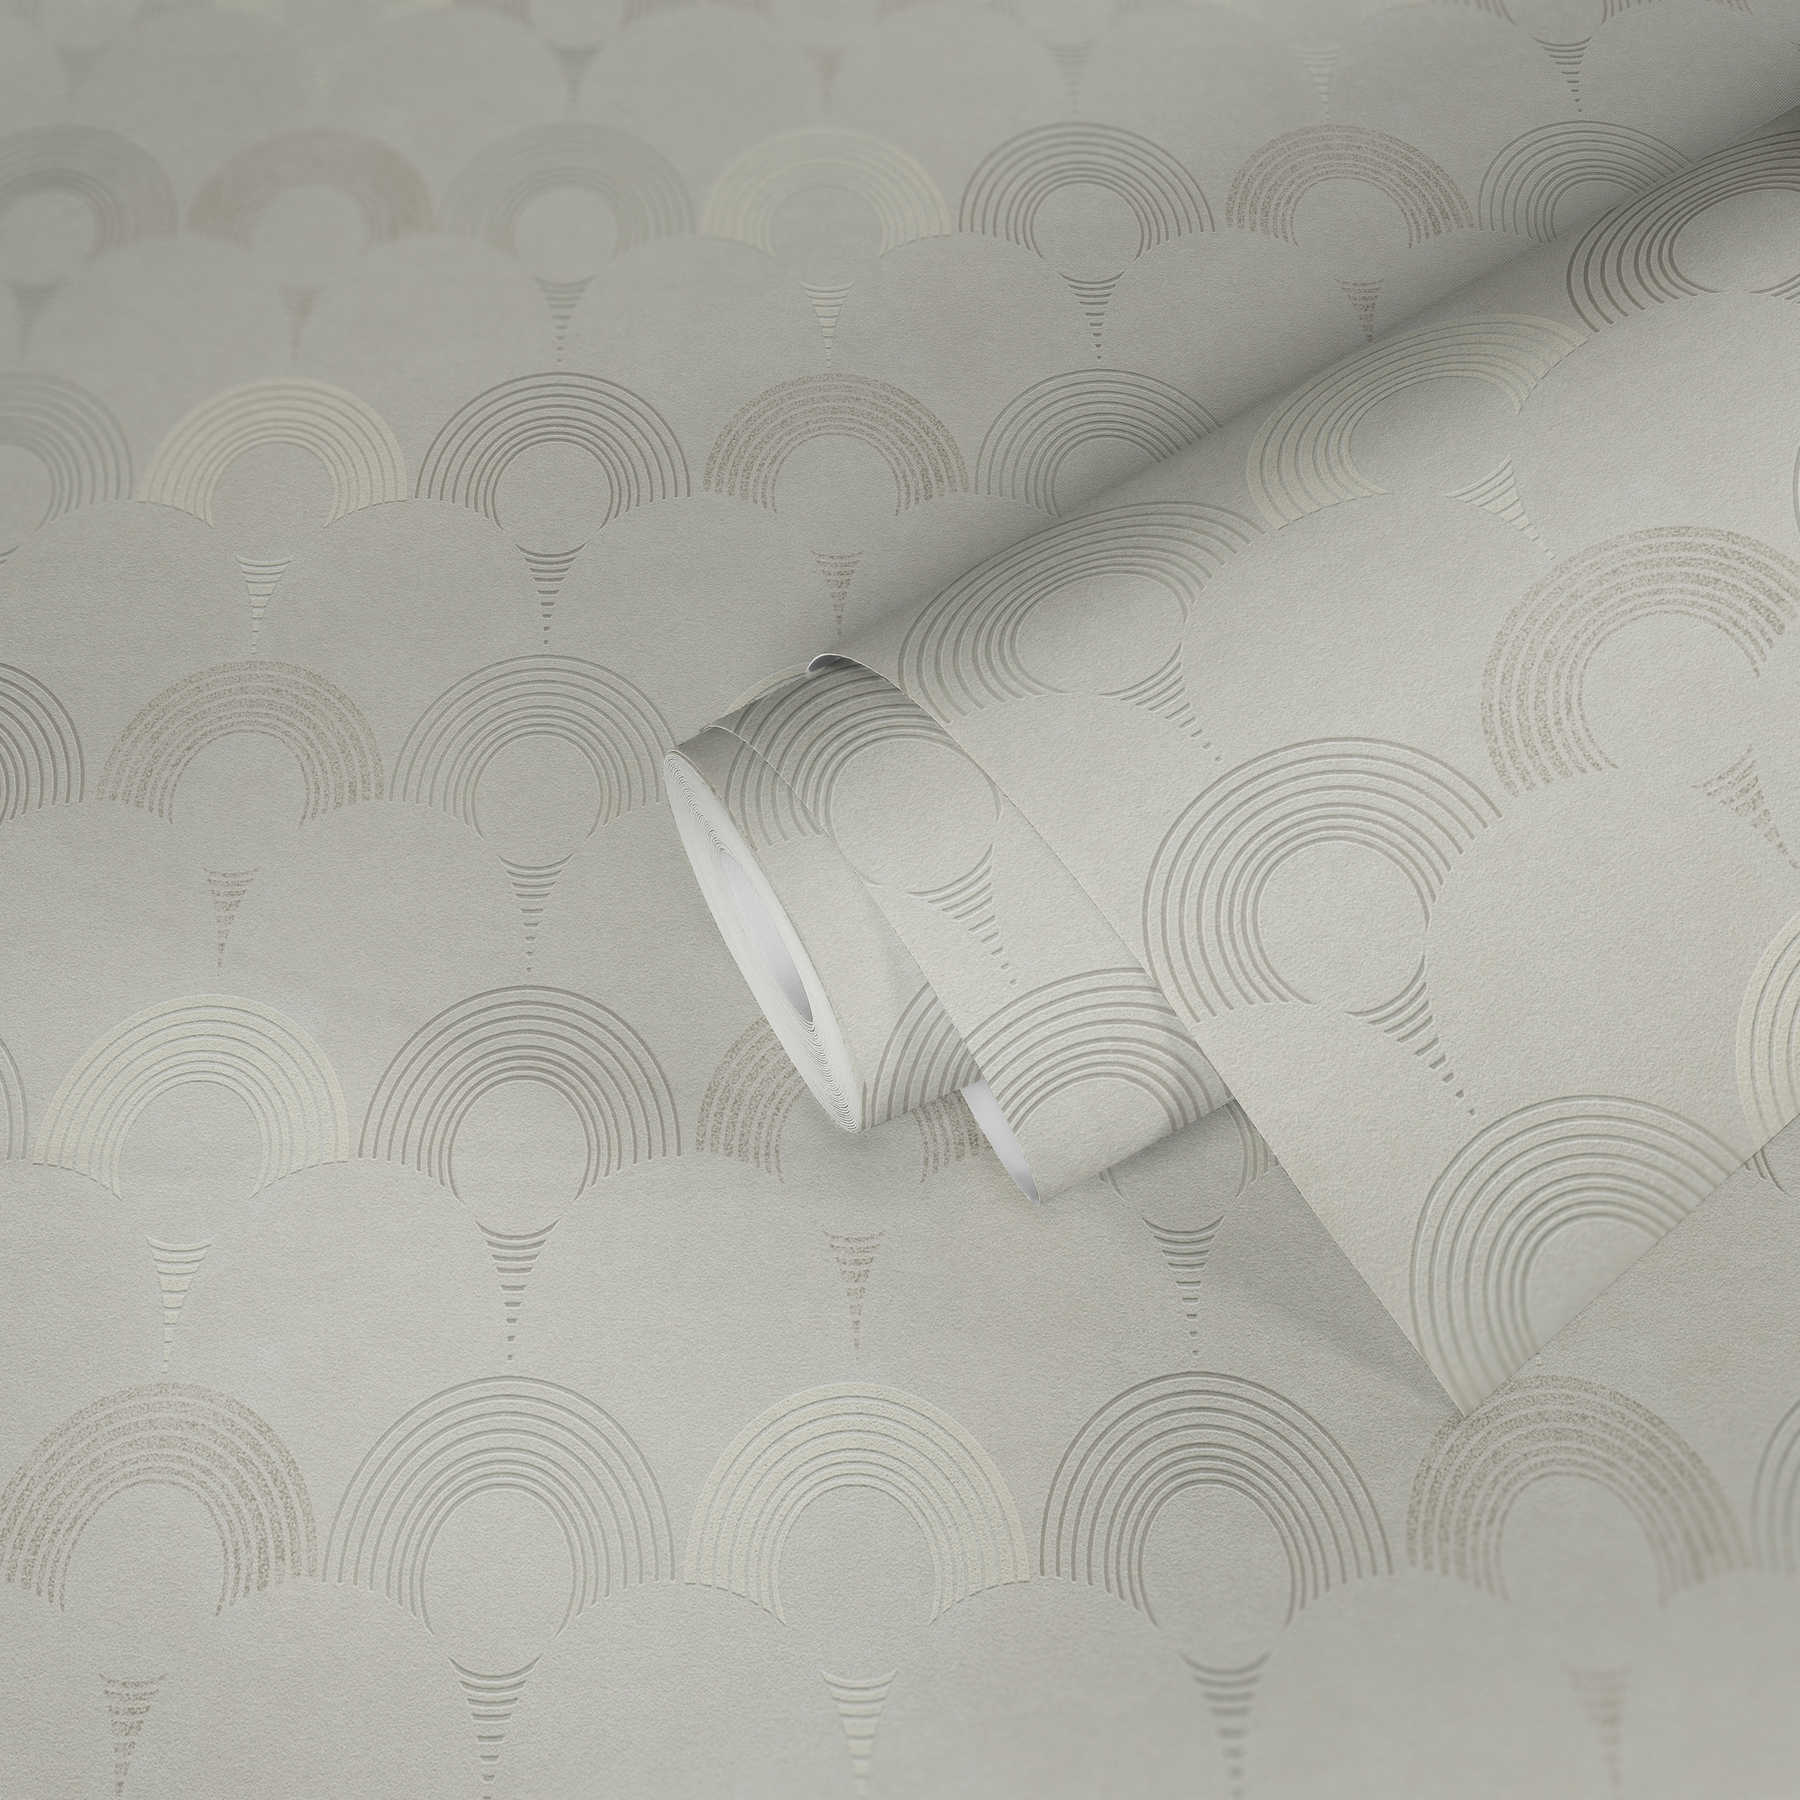             Non-woven wallpaper retro style, geometric circle pattern - grey, silver, white
        